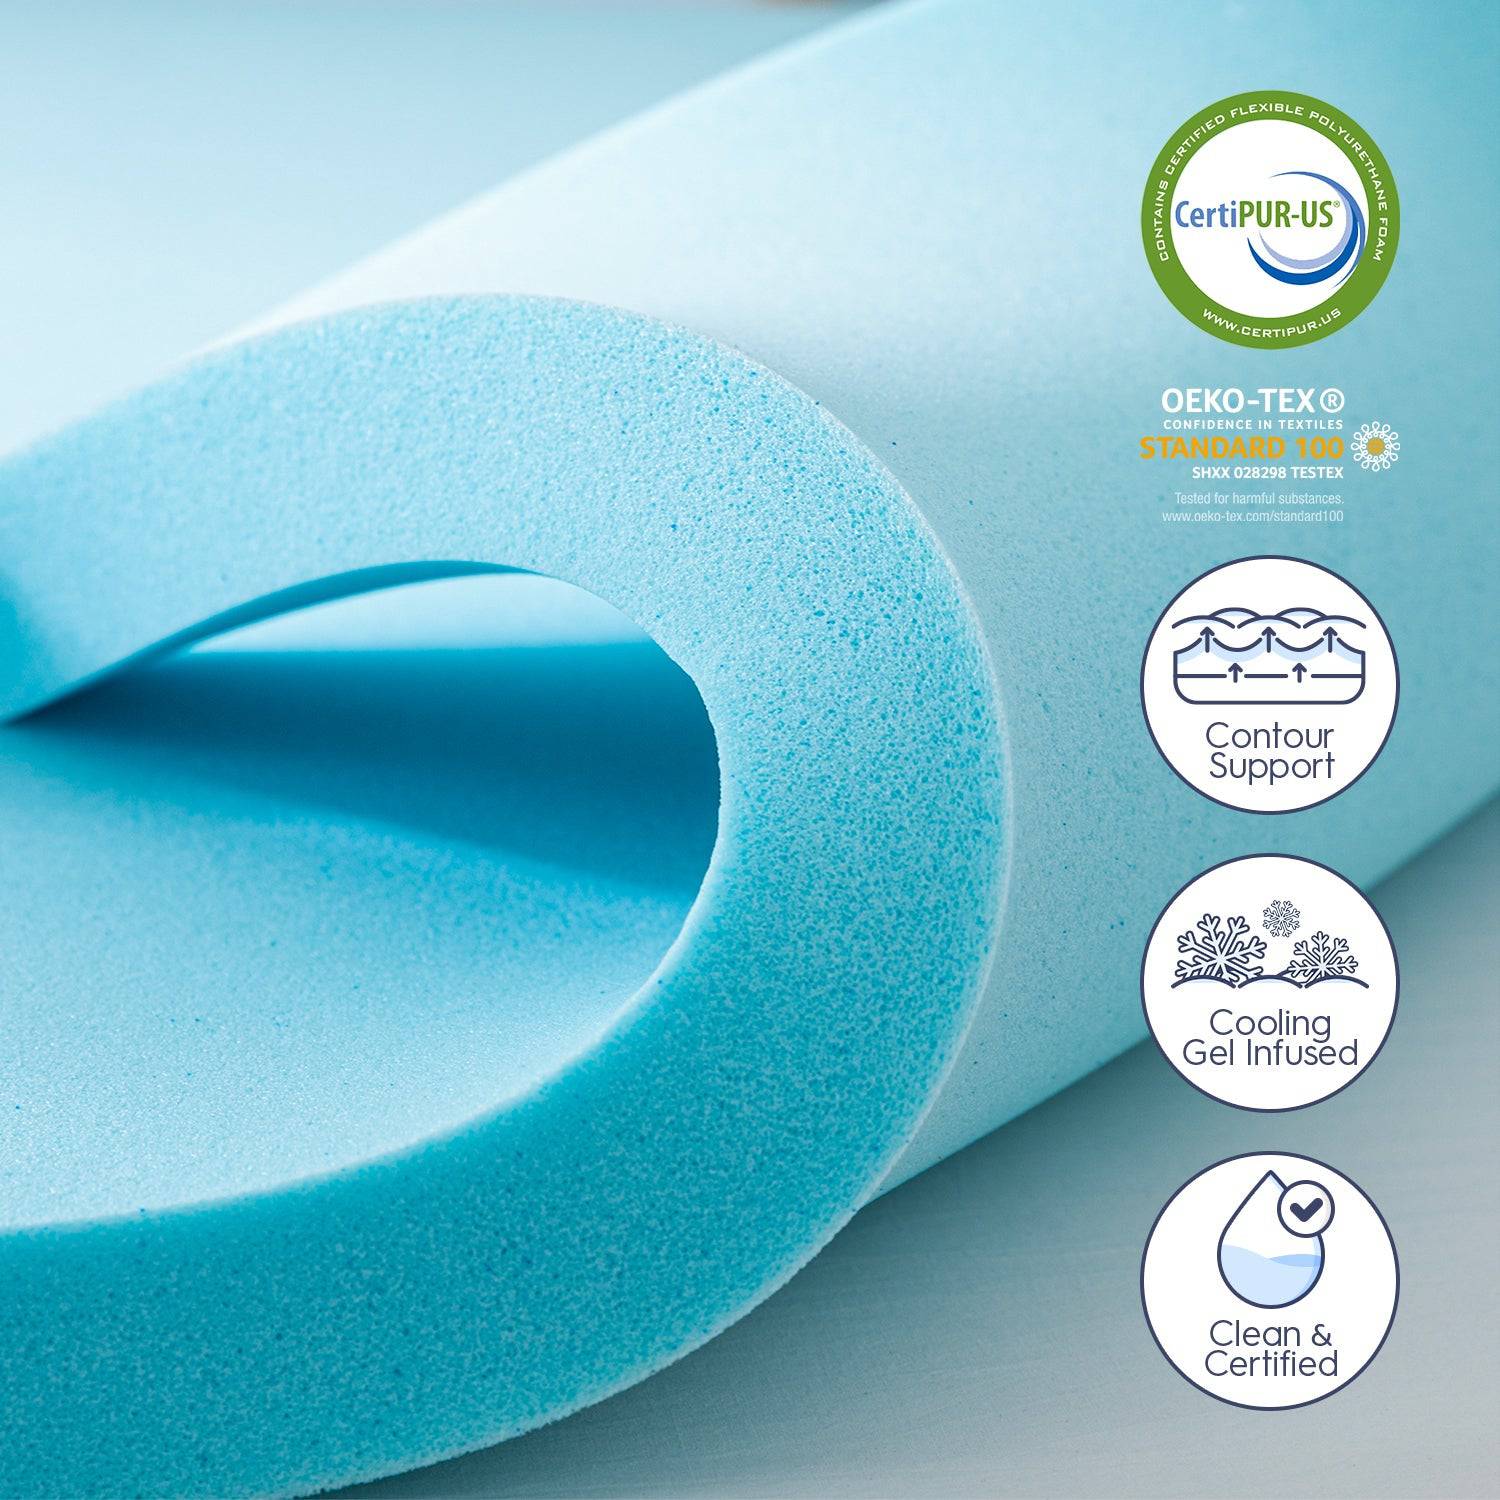 How to clean a foam mattress topper